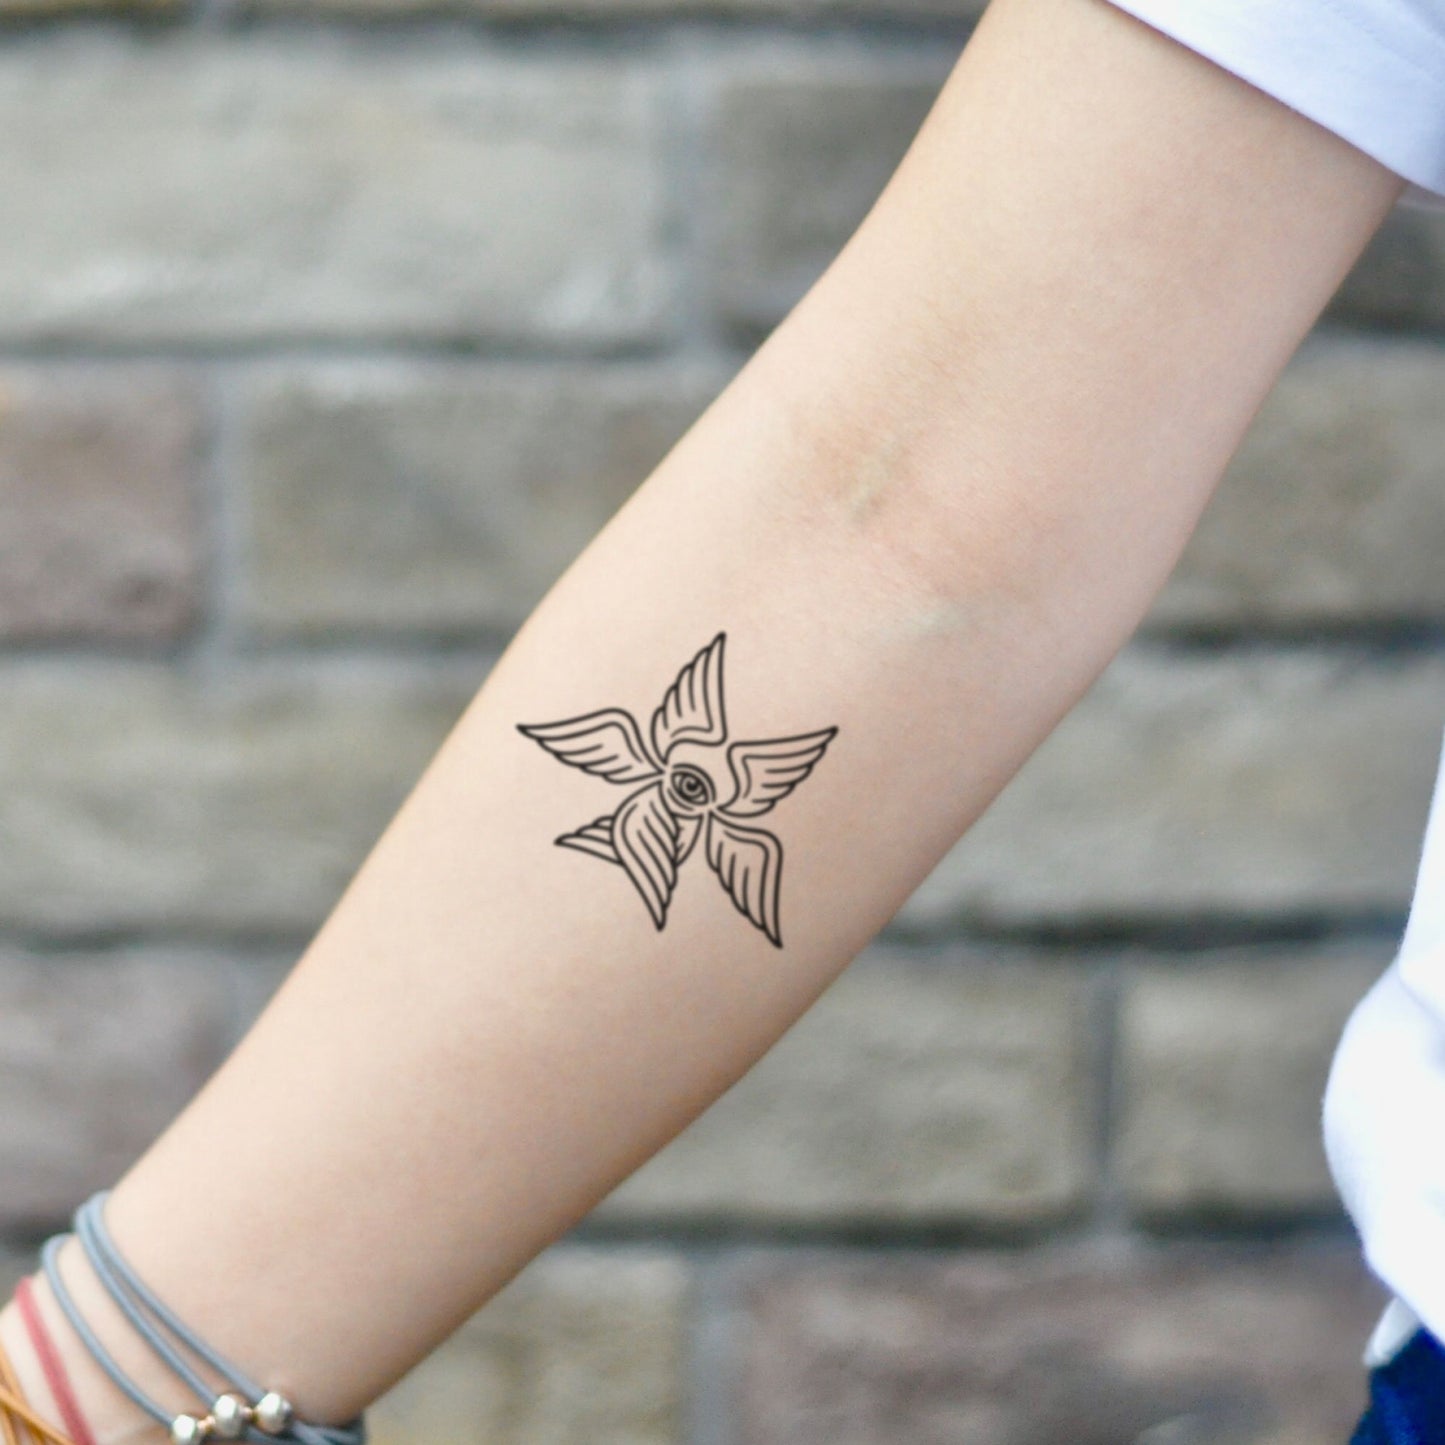 fake small seraphim angel wings illustrative temporary tattoo sticker design idea on inner arm